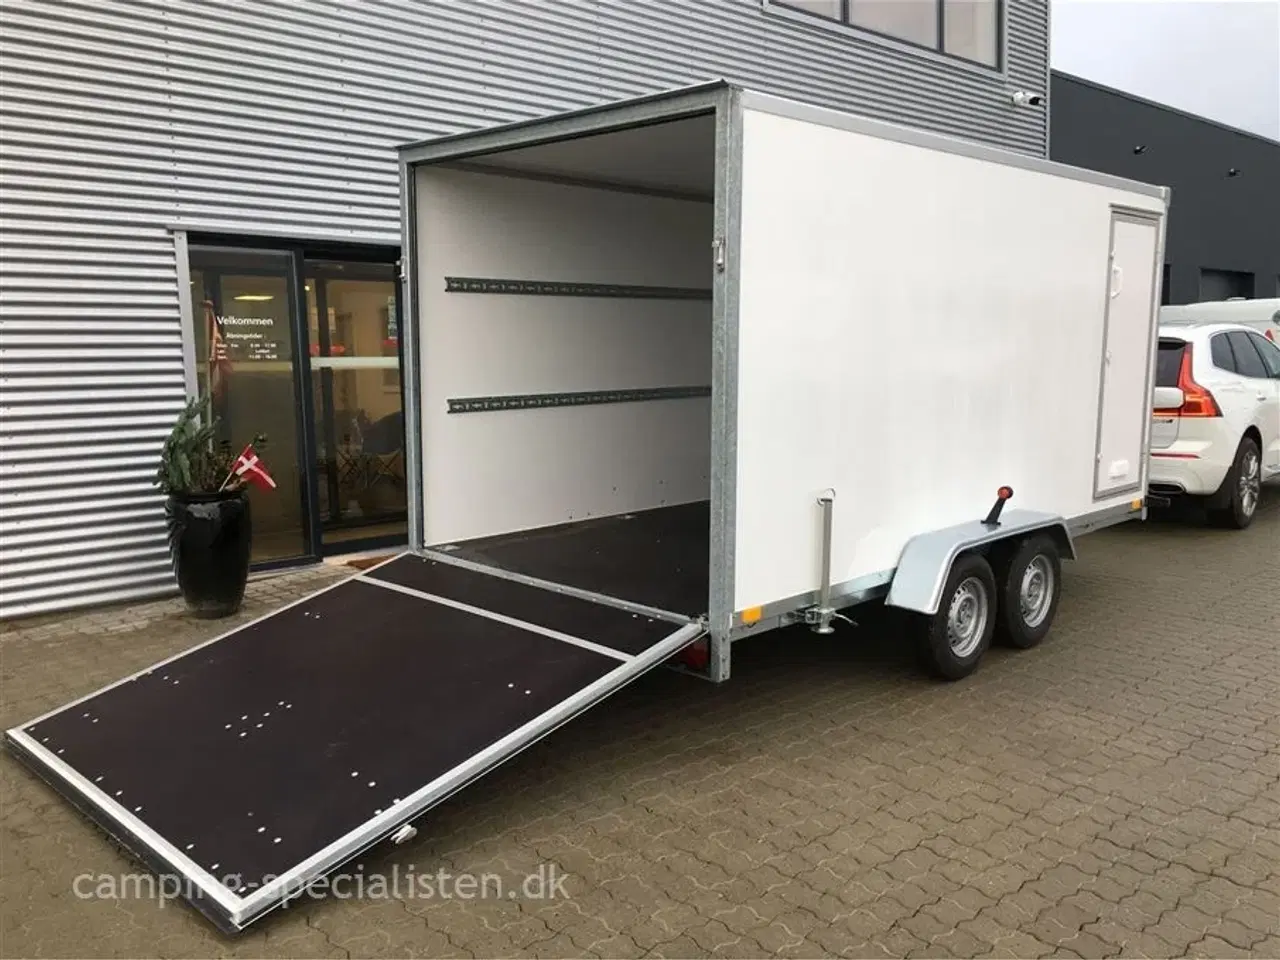 Billede 2 - 2024 - Selandia Cargotrailer Stor 2541 HT 2500 kg    Ny Cargo trailer 2*4 meter Model 2024  Camping-Specialisten.dk Silkeborg og Arhus